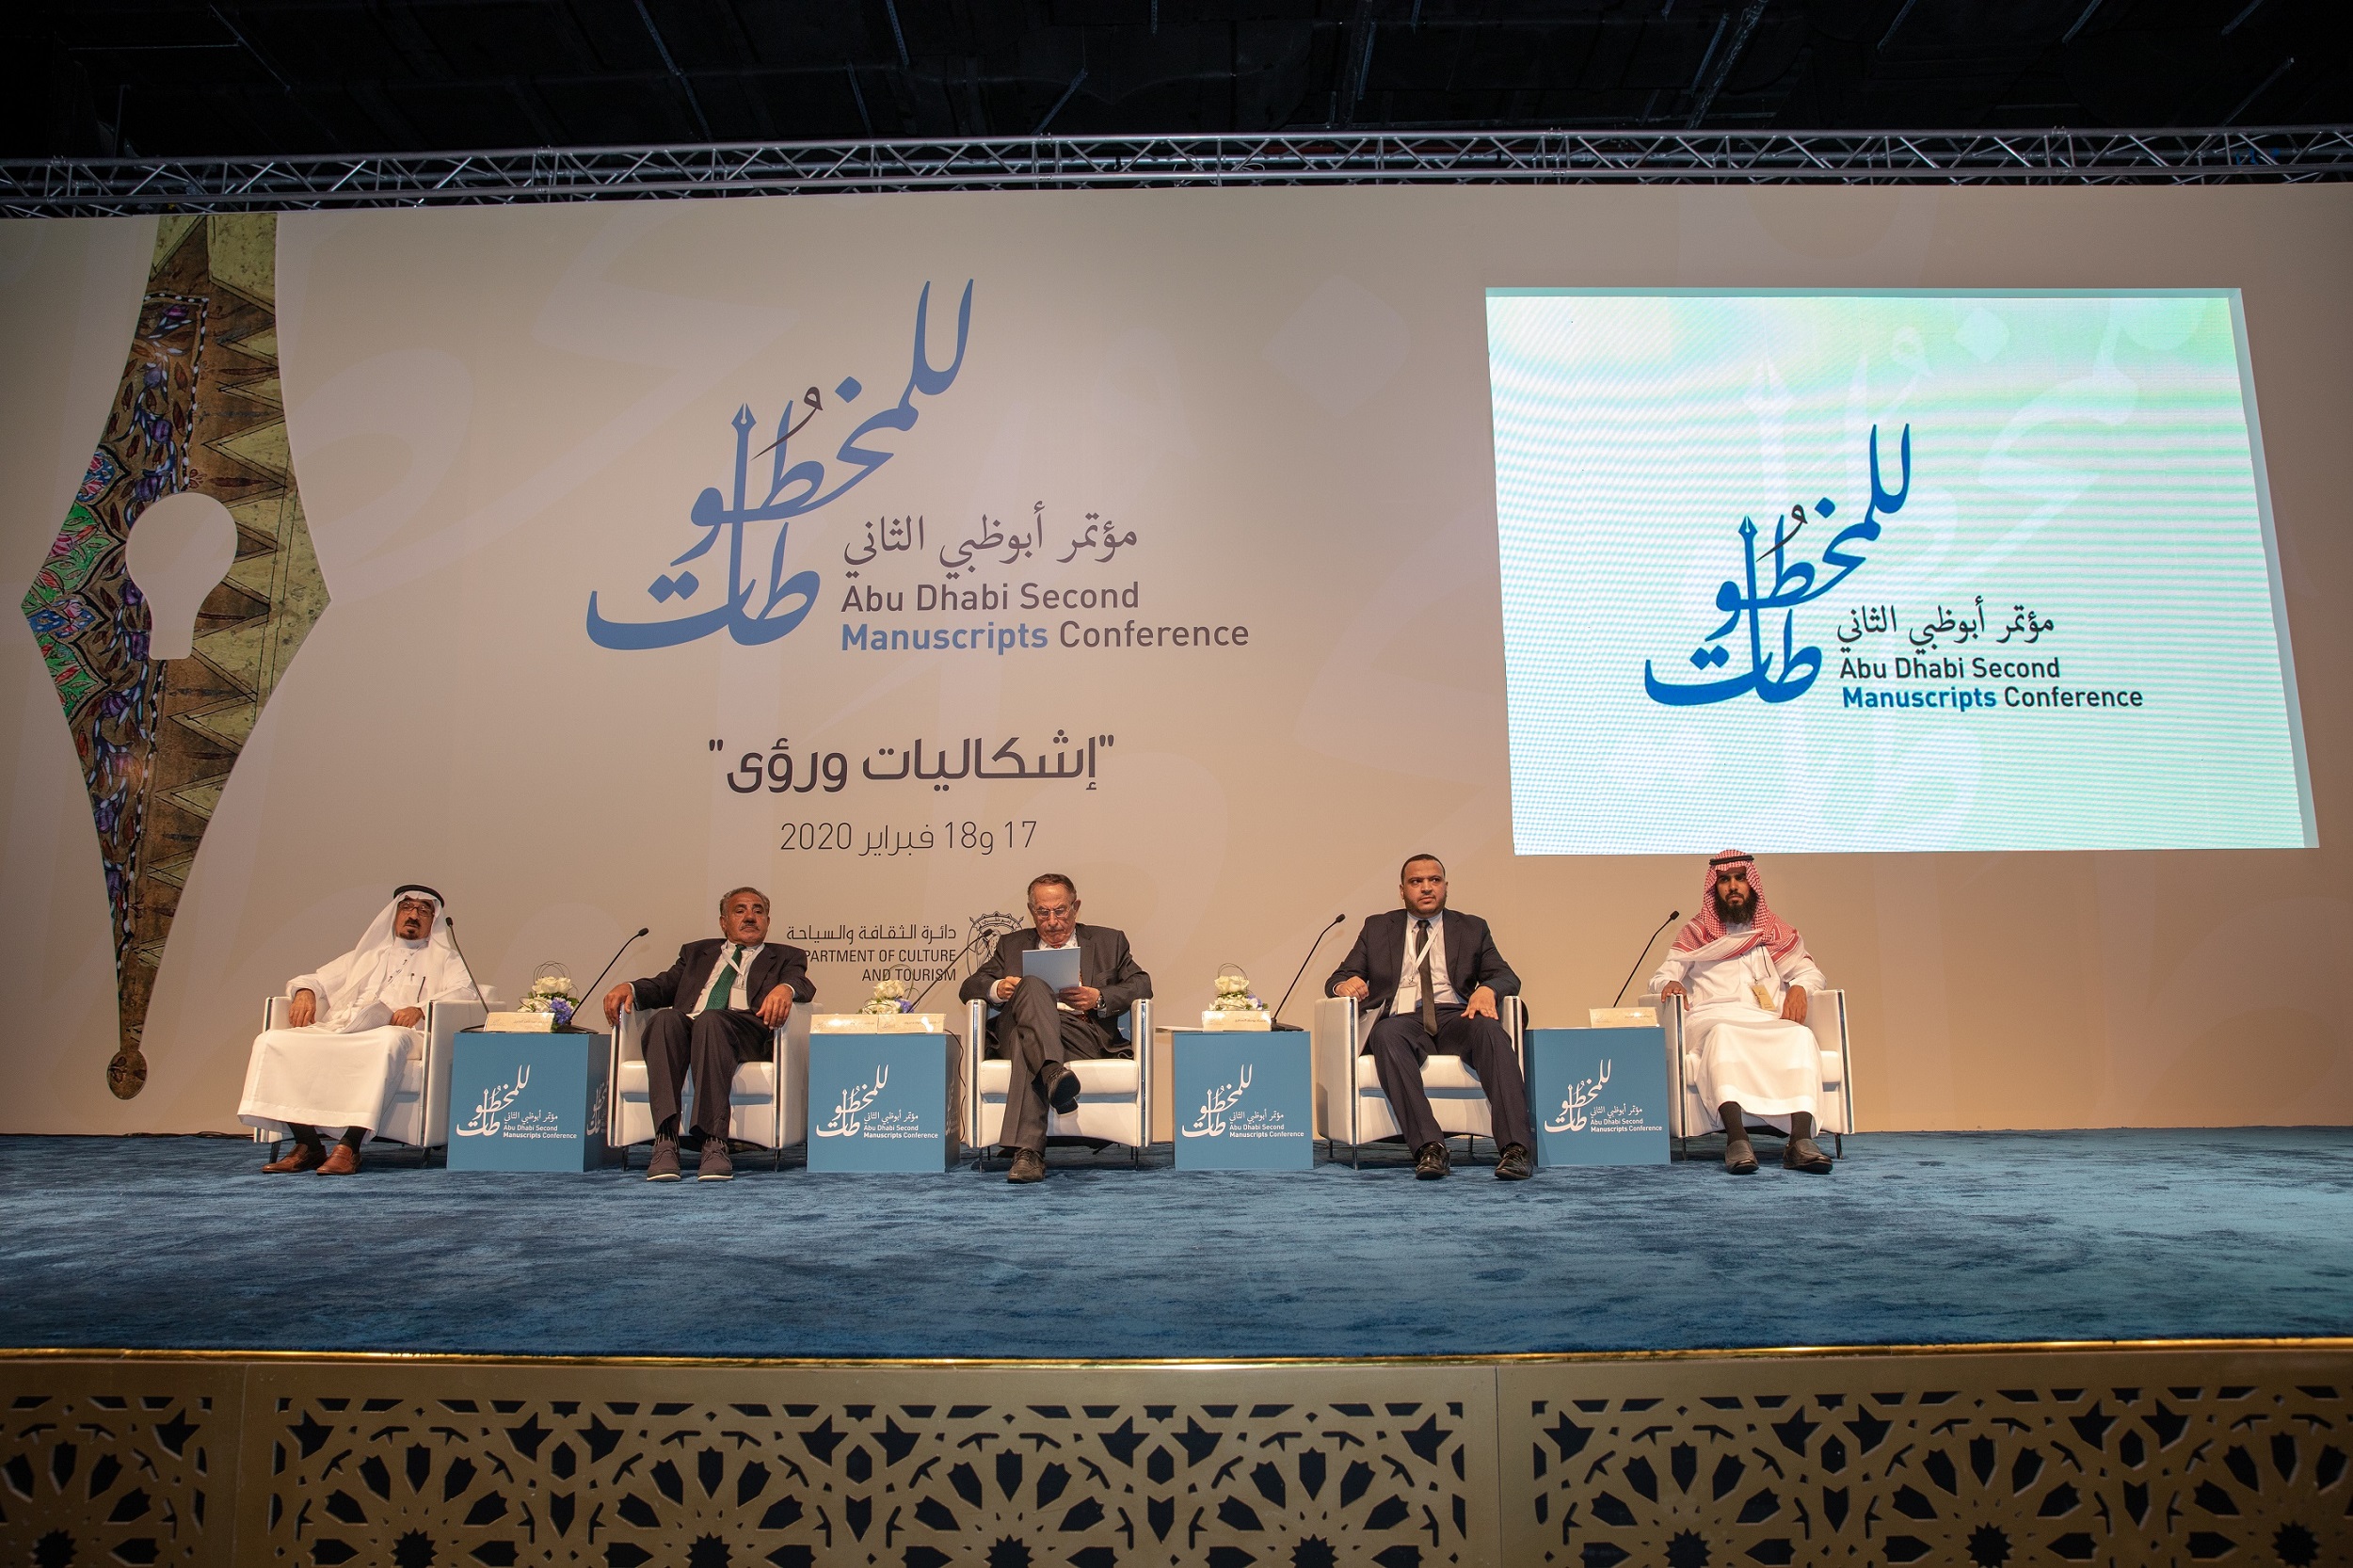 Abu Dhabi Manuscripts Conference Kicks Off At Manarat Al Saadiyat